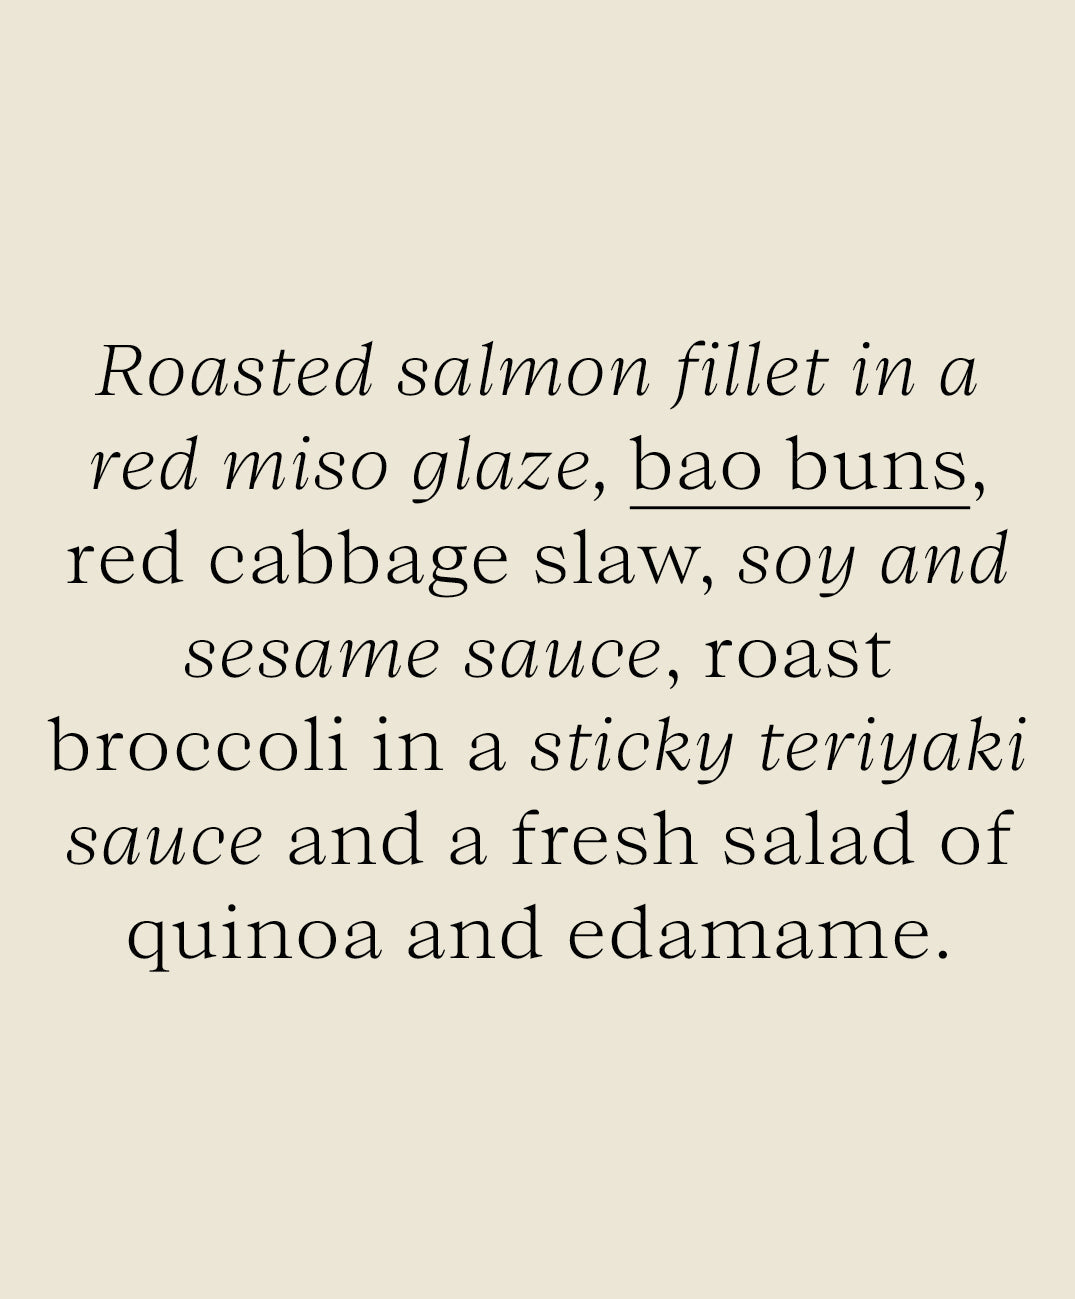 Miso Salmon & Bao Buns with Sticky Teriyaki Roast Broccoli - BLACK FRIDAY SALE